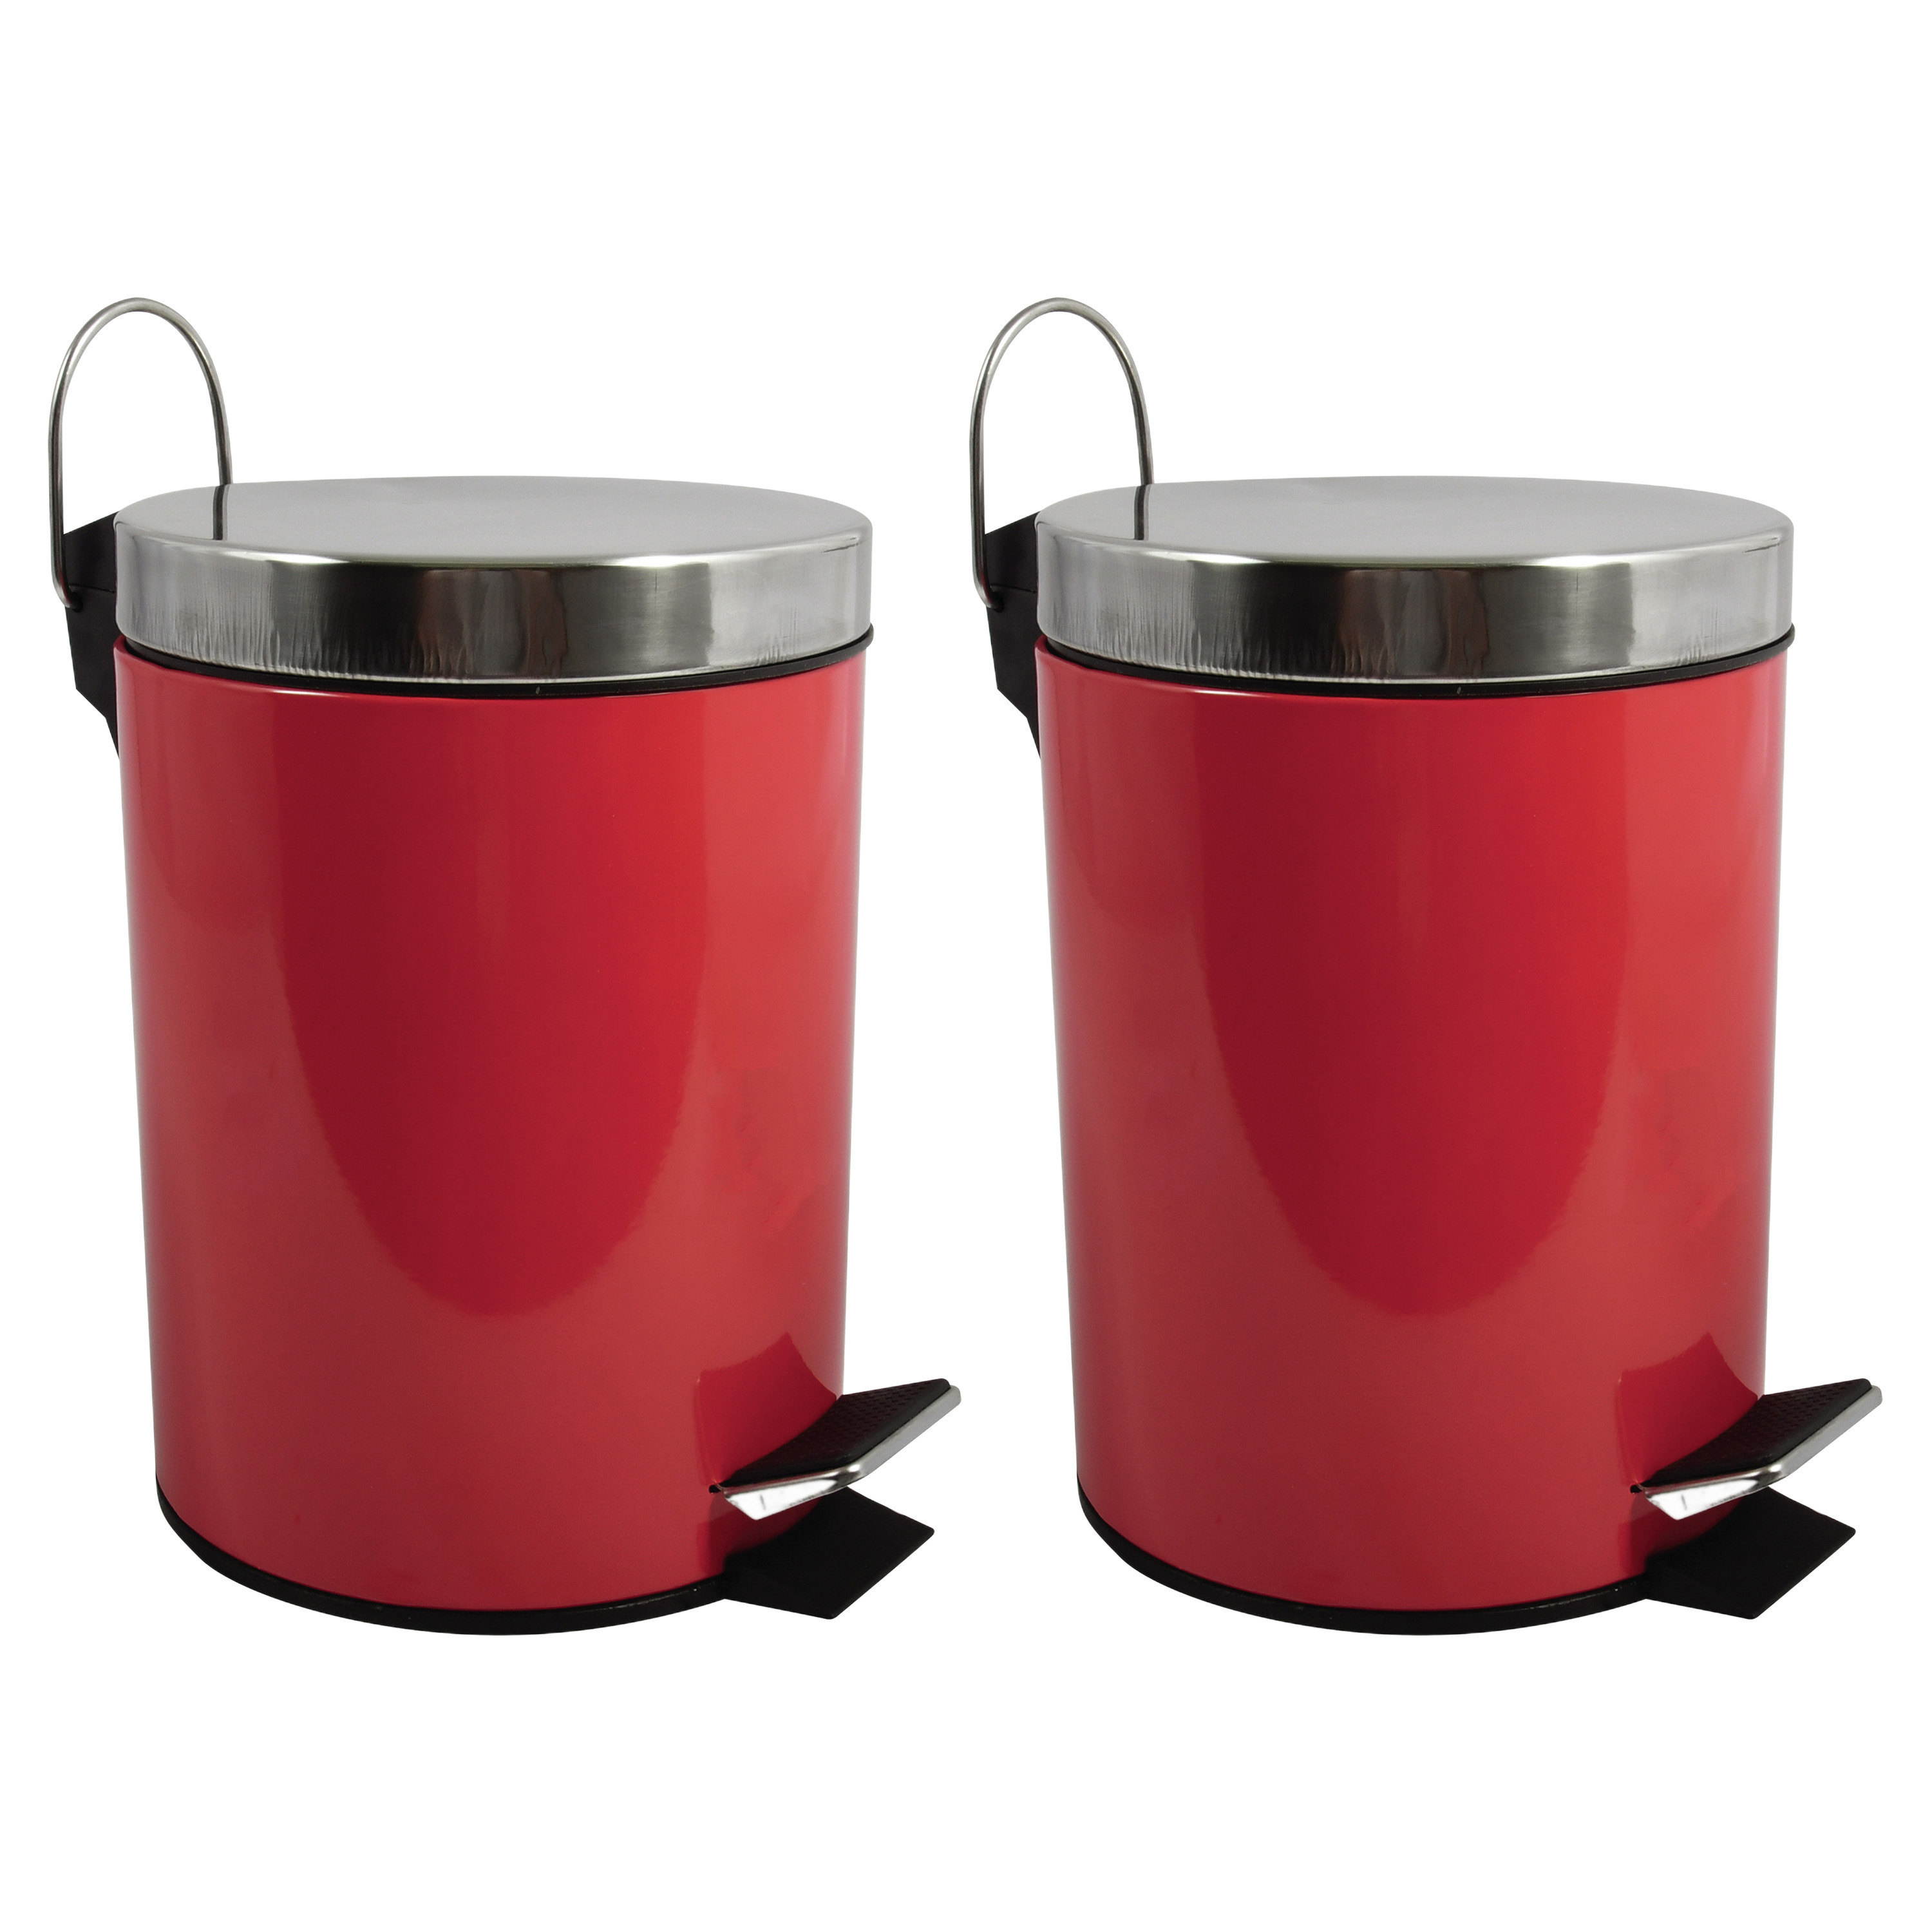 Prullenbak-pedaalemmer 2x metaal rood 5 liter 20 x 28 cm Badkamer-toilet